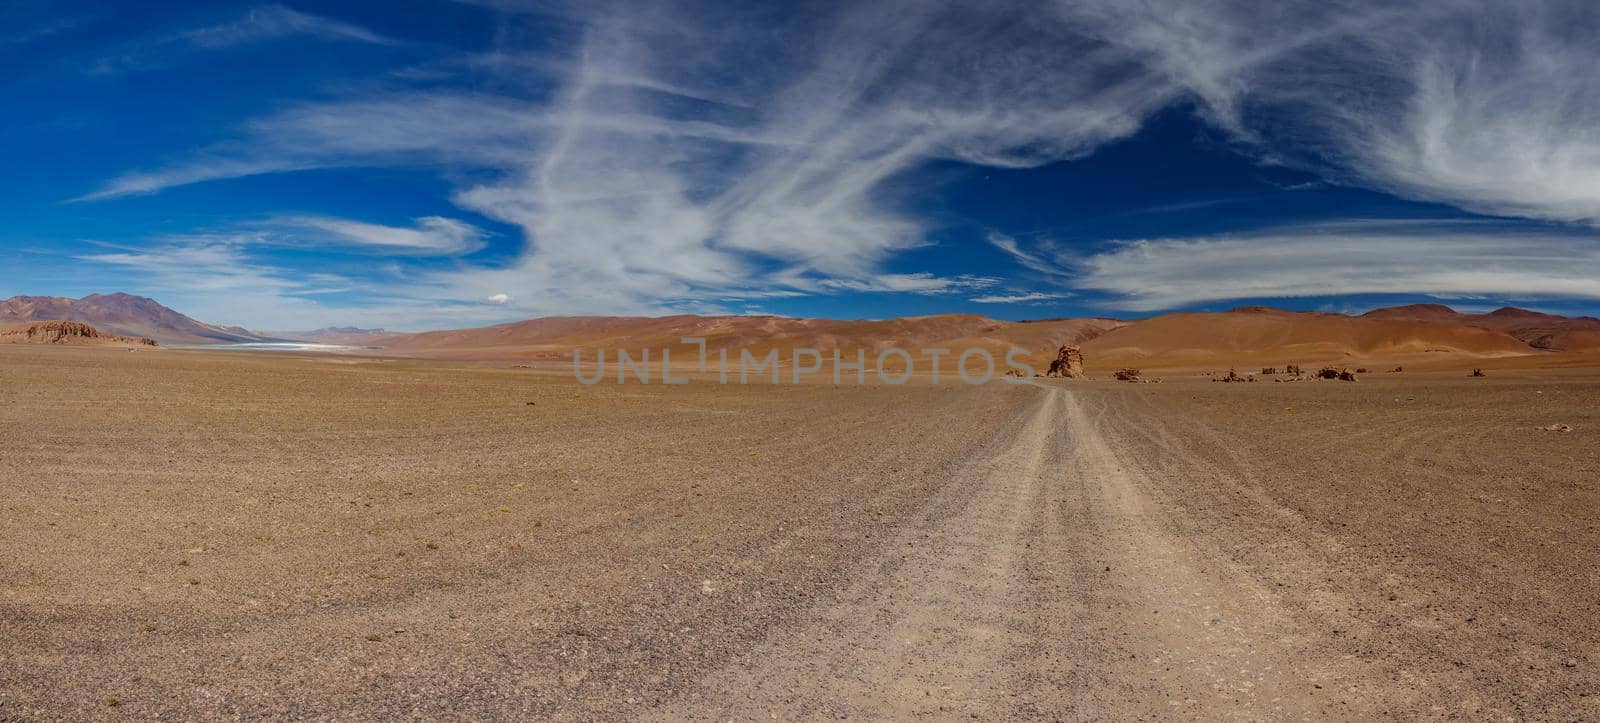 Track to Pacana Monks in Atacama desert by FerradalFCG